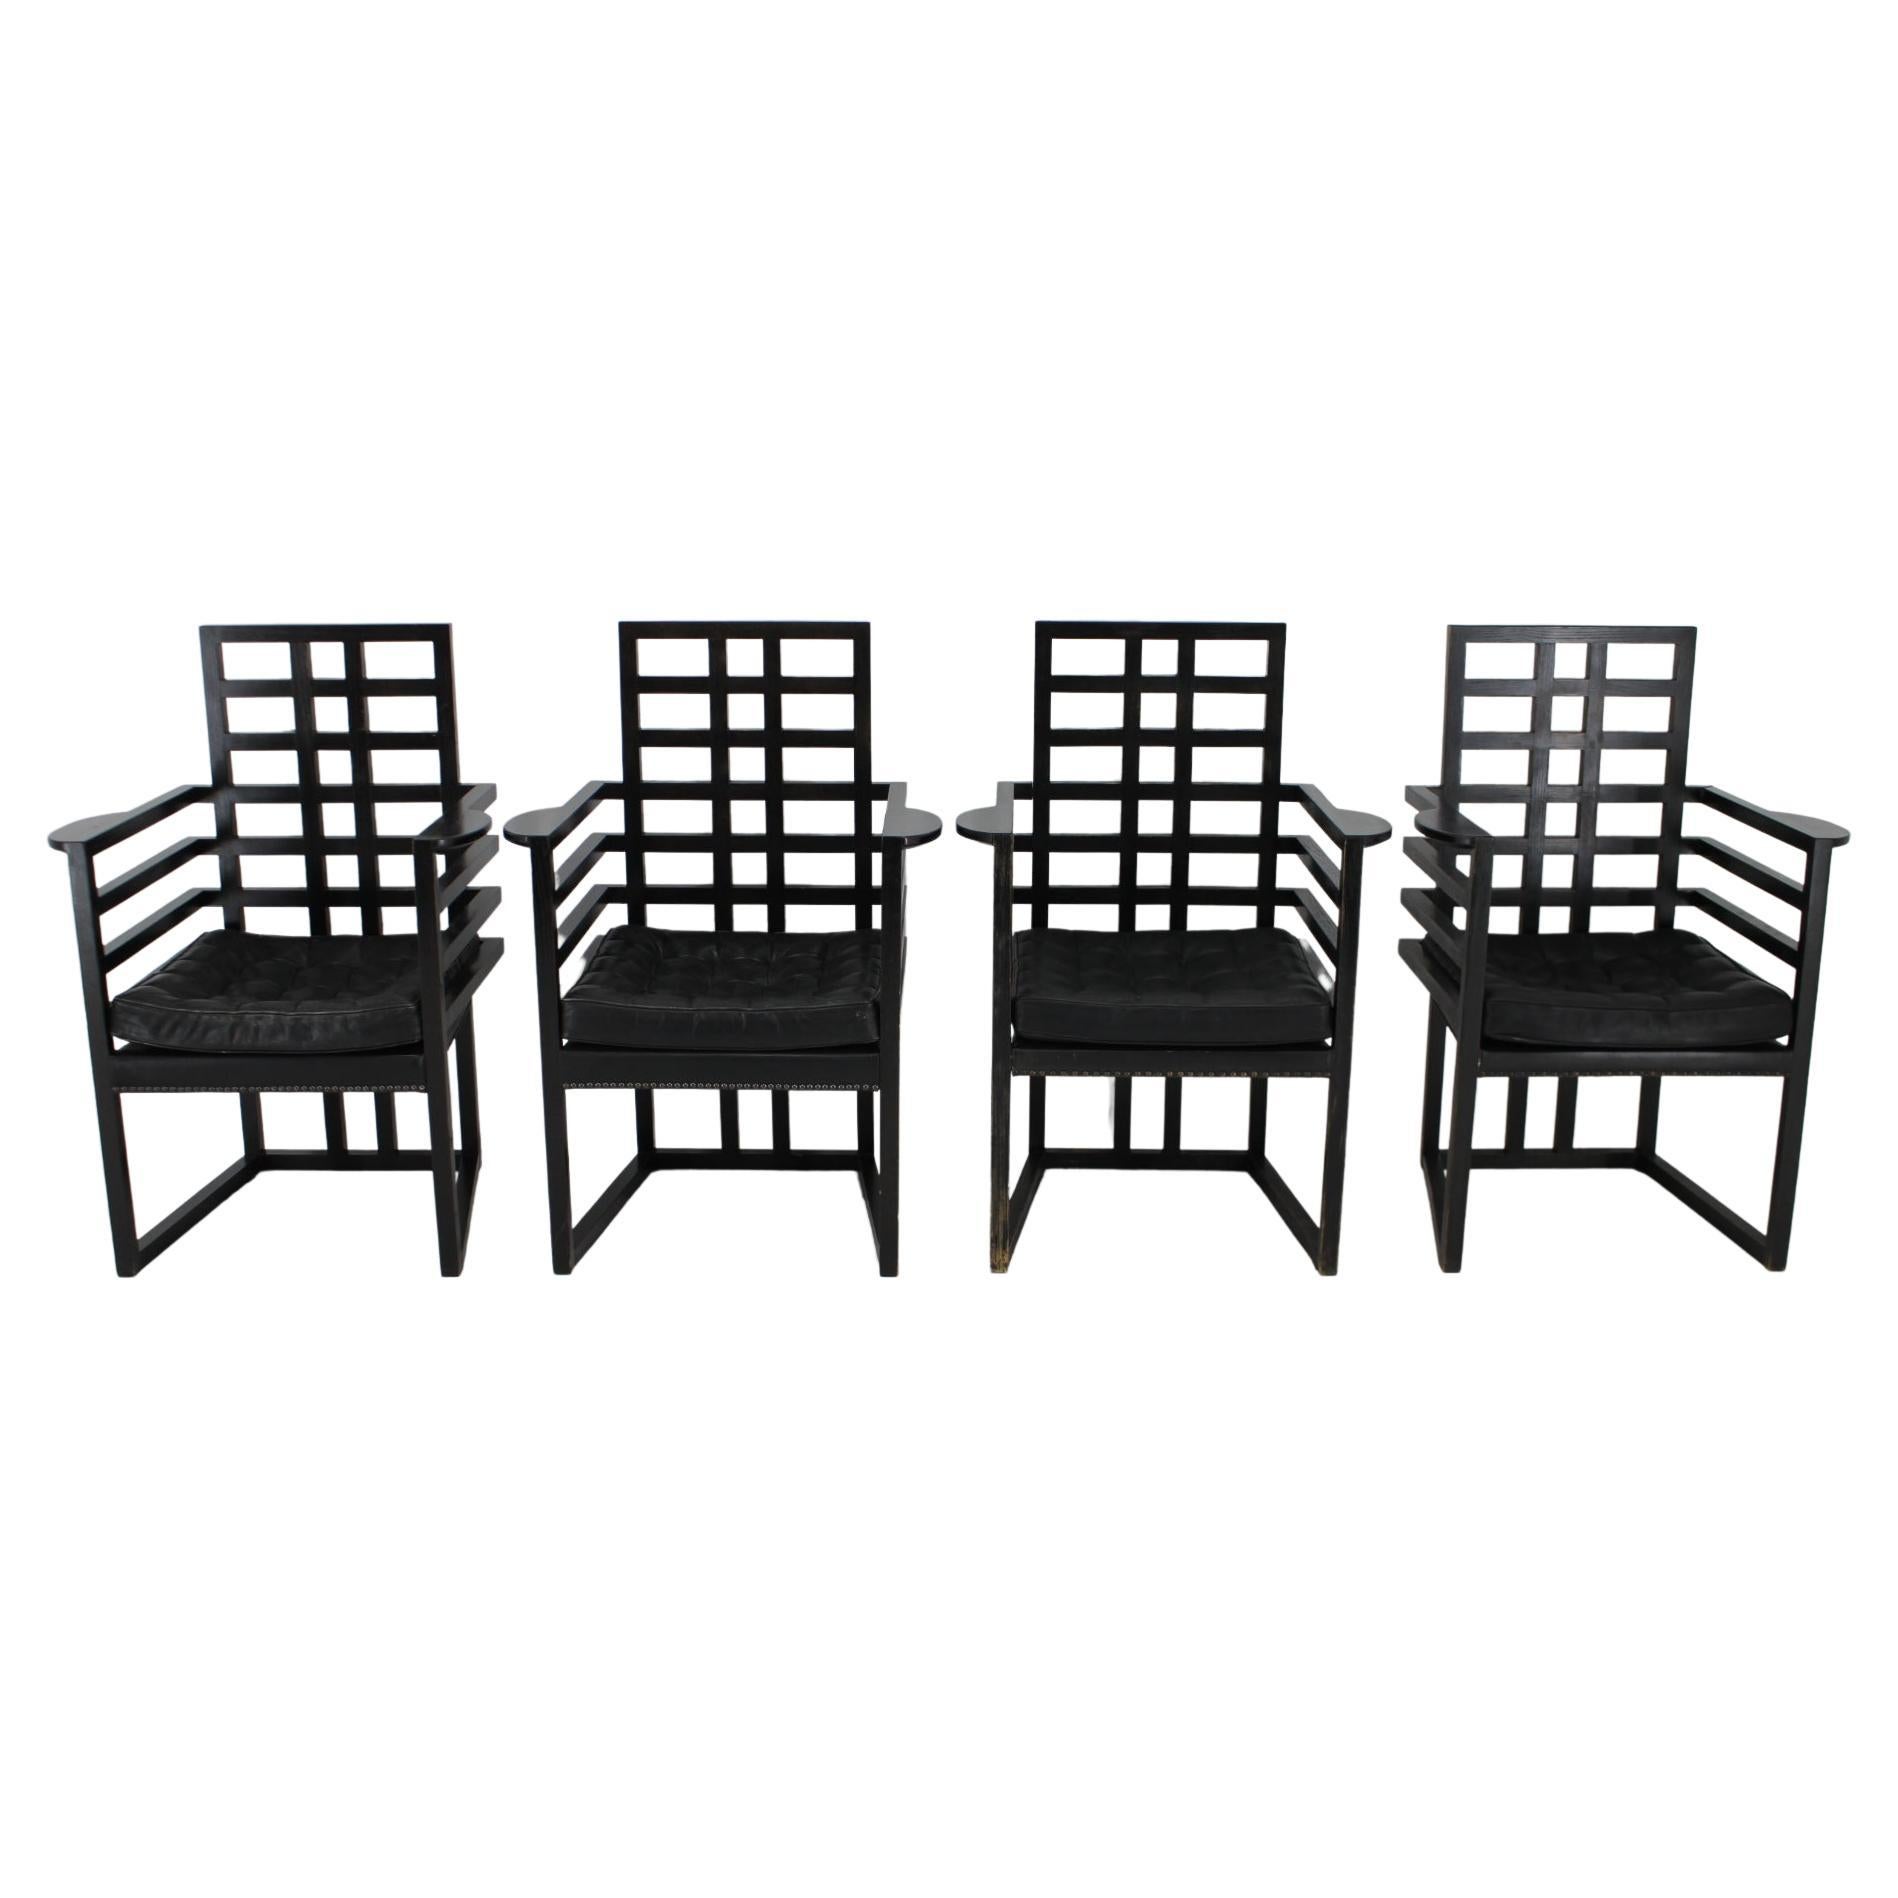 Set of Four Josef Hoffmann Armloffel Chairs Made by Wittmann, Austria